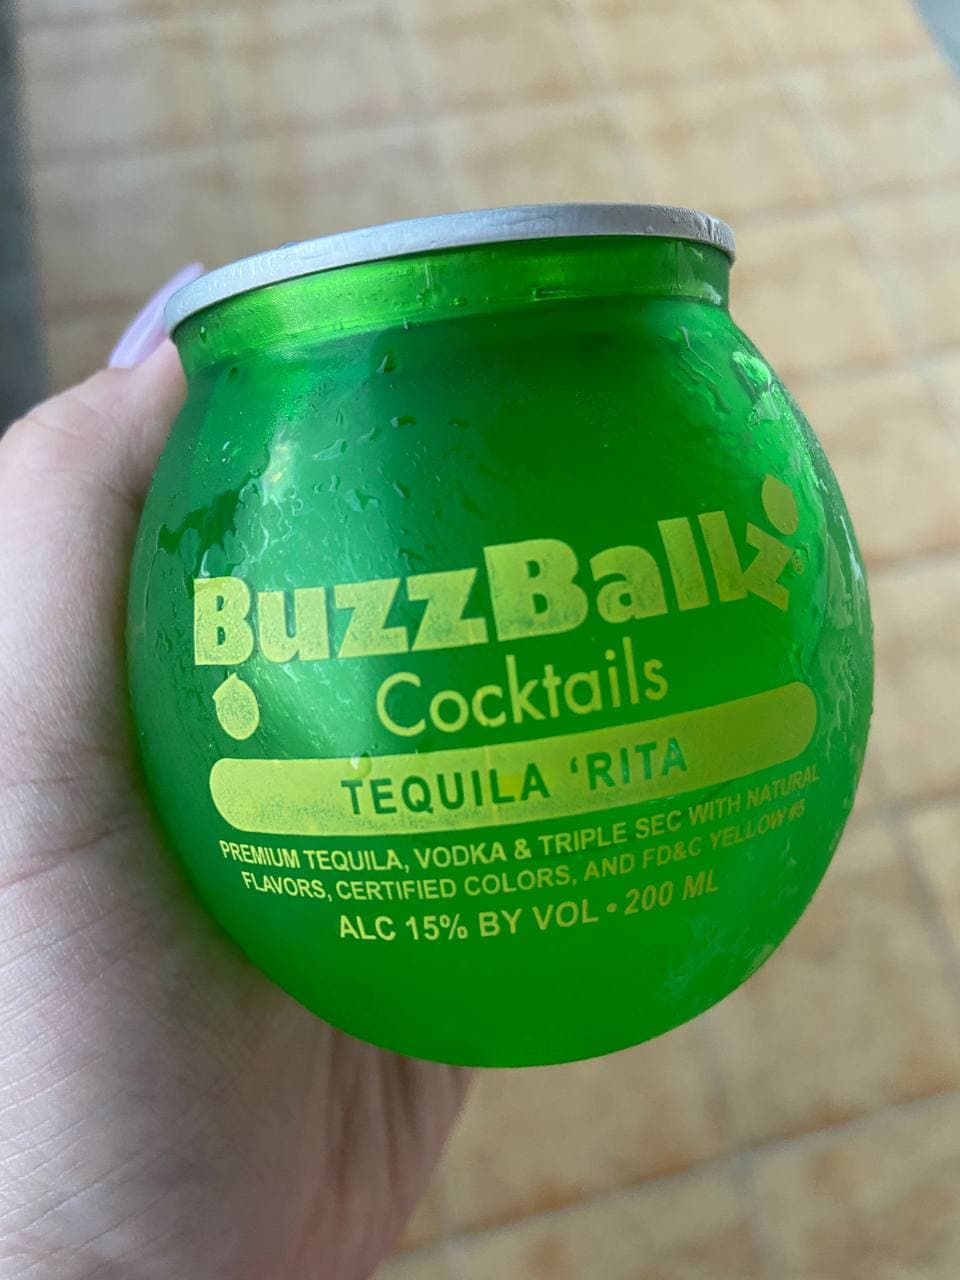 Buzzballz - Tequila rita